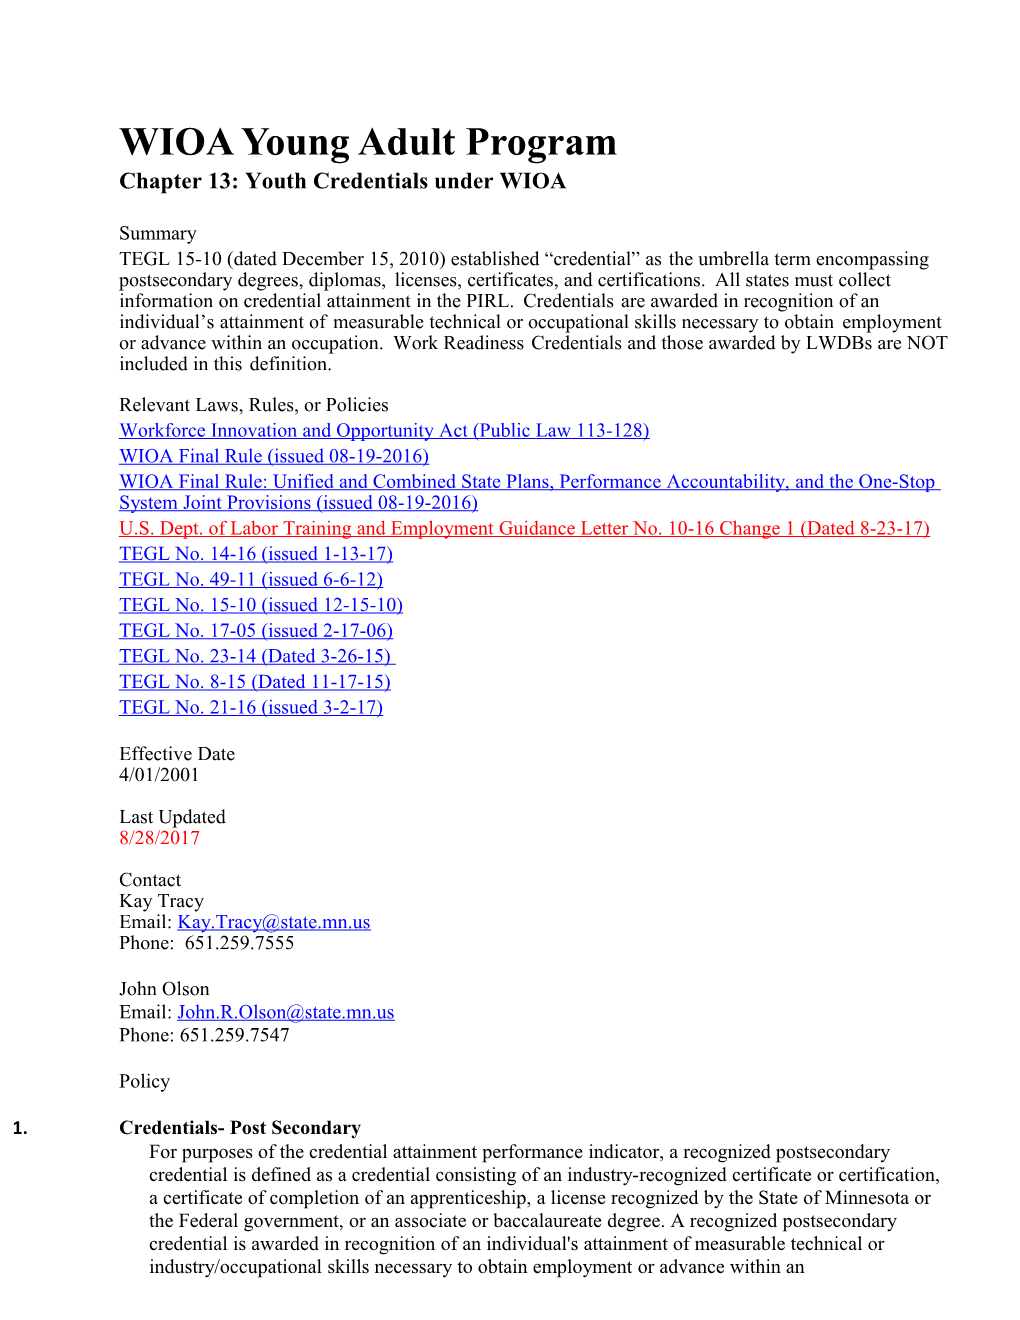 Microsoft Word - Full WIA Admin Manual - 3-27-15